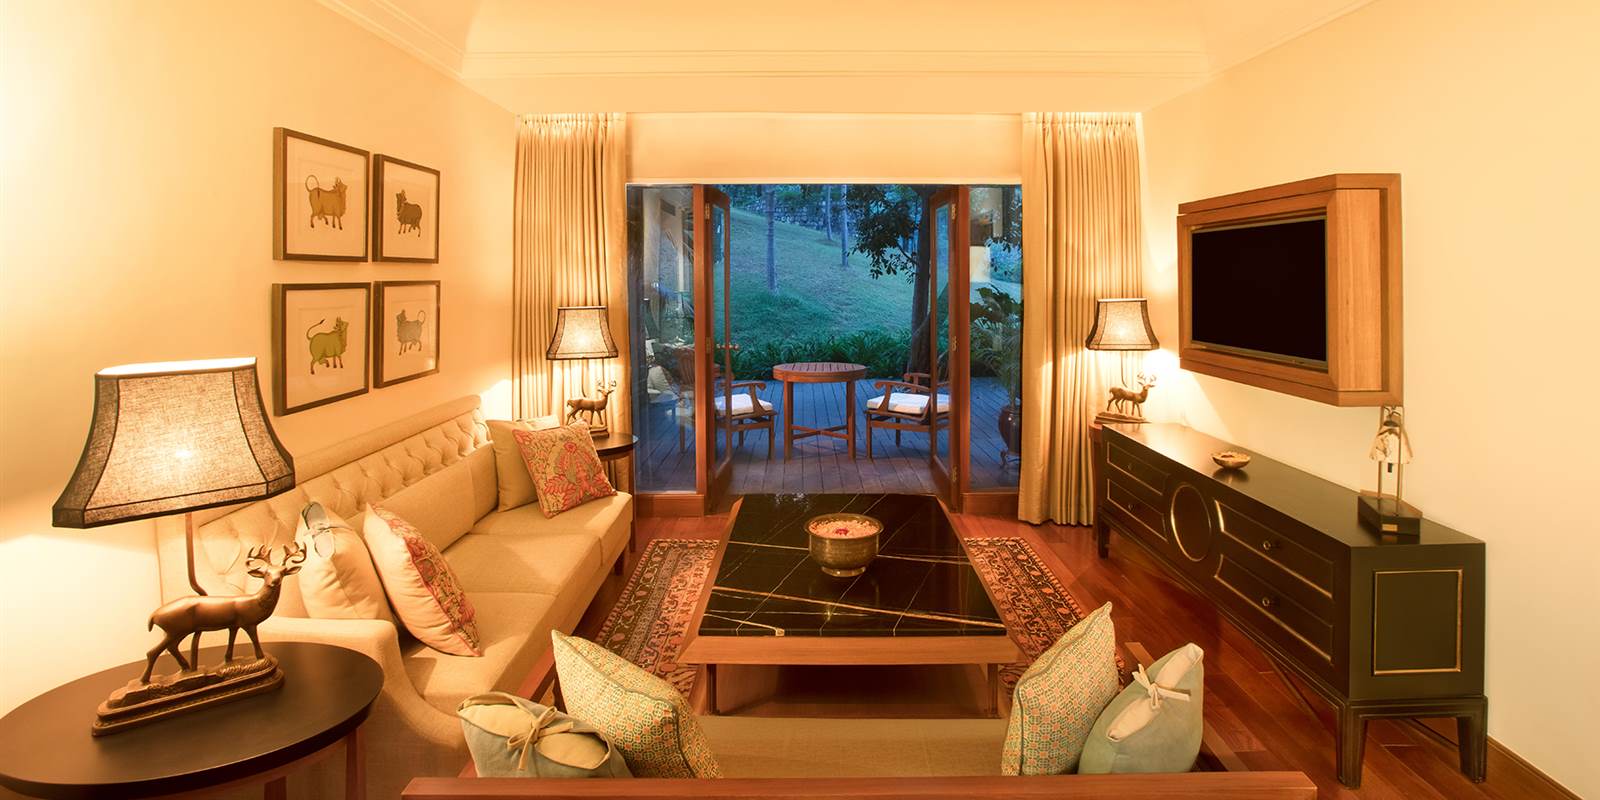 Garden Suite Living Room in Rishikesh, India